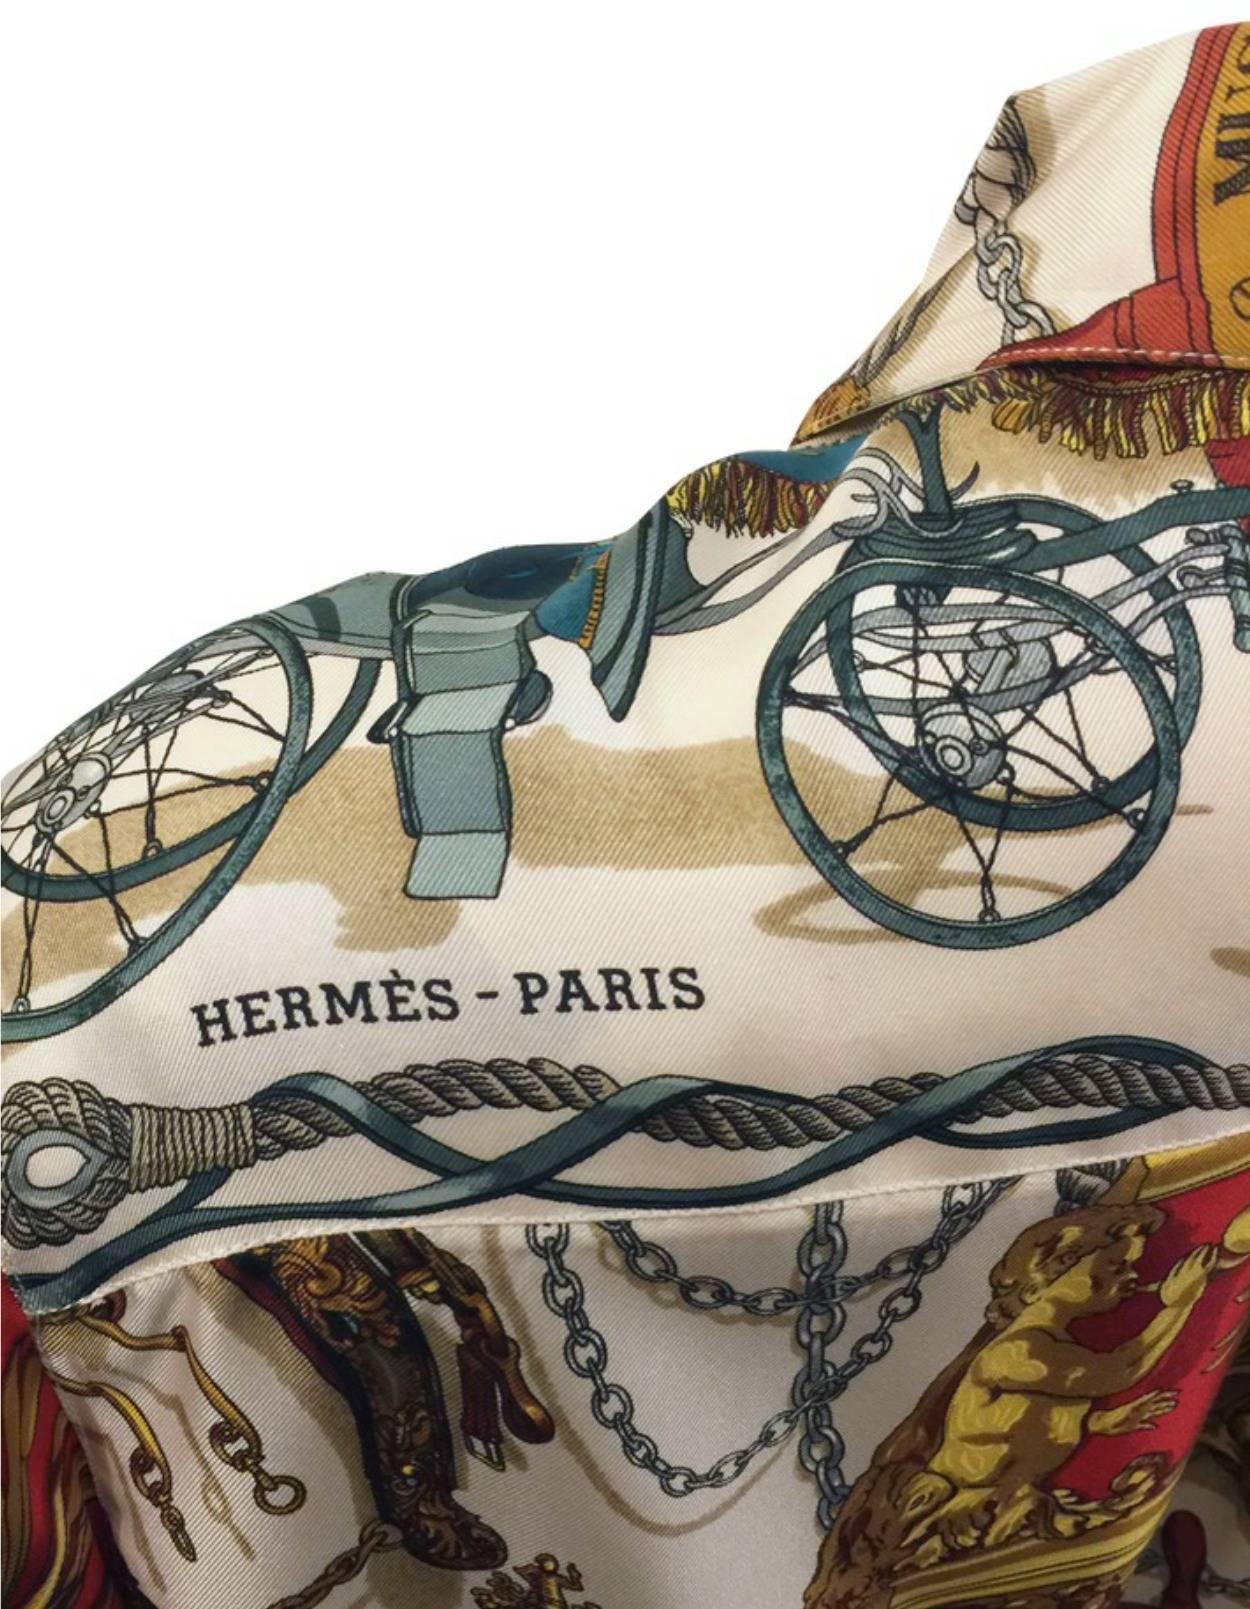 Hermes Paris 1990’s Musee Silk Blouse by Phillippe Ledoux 2